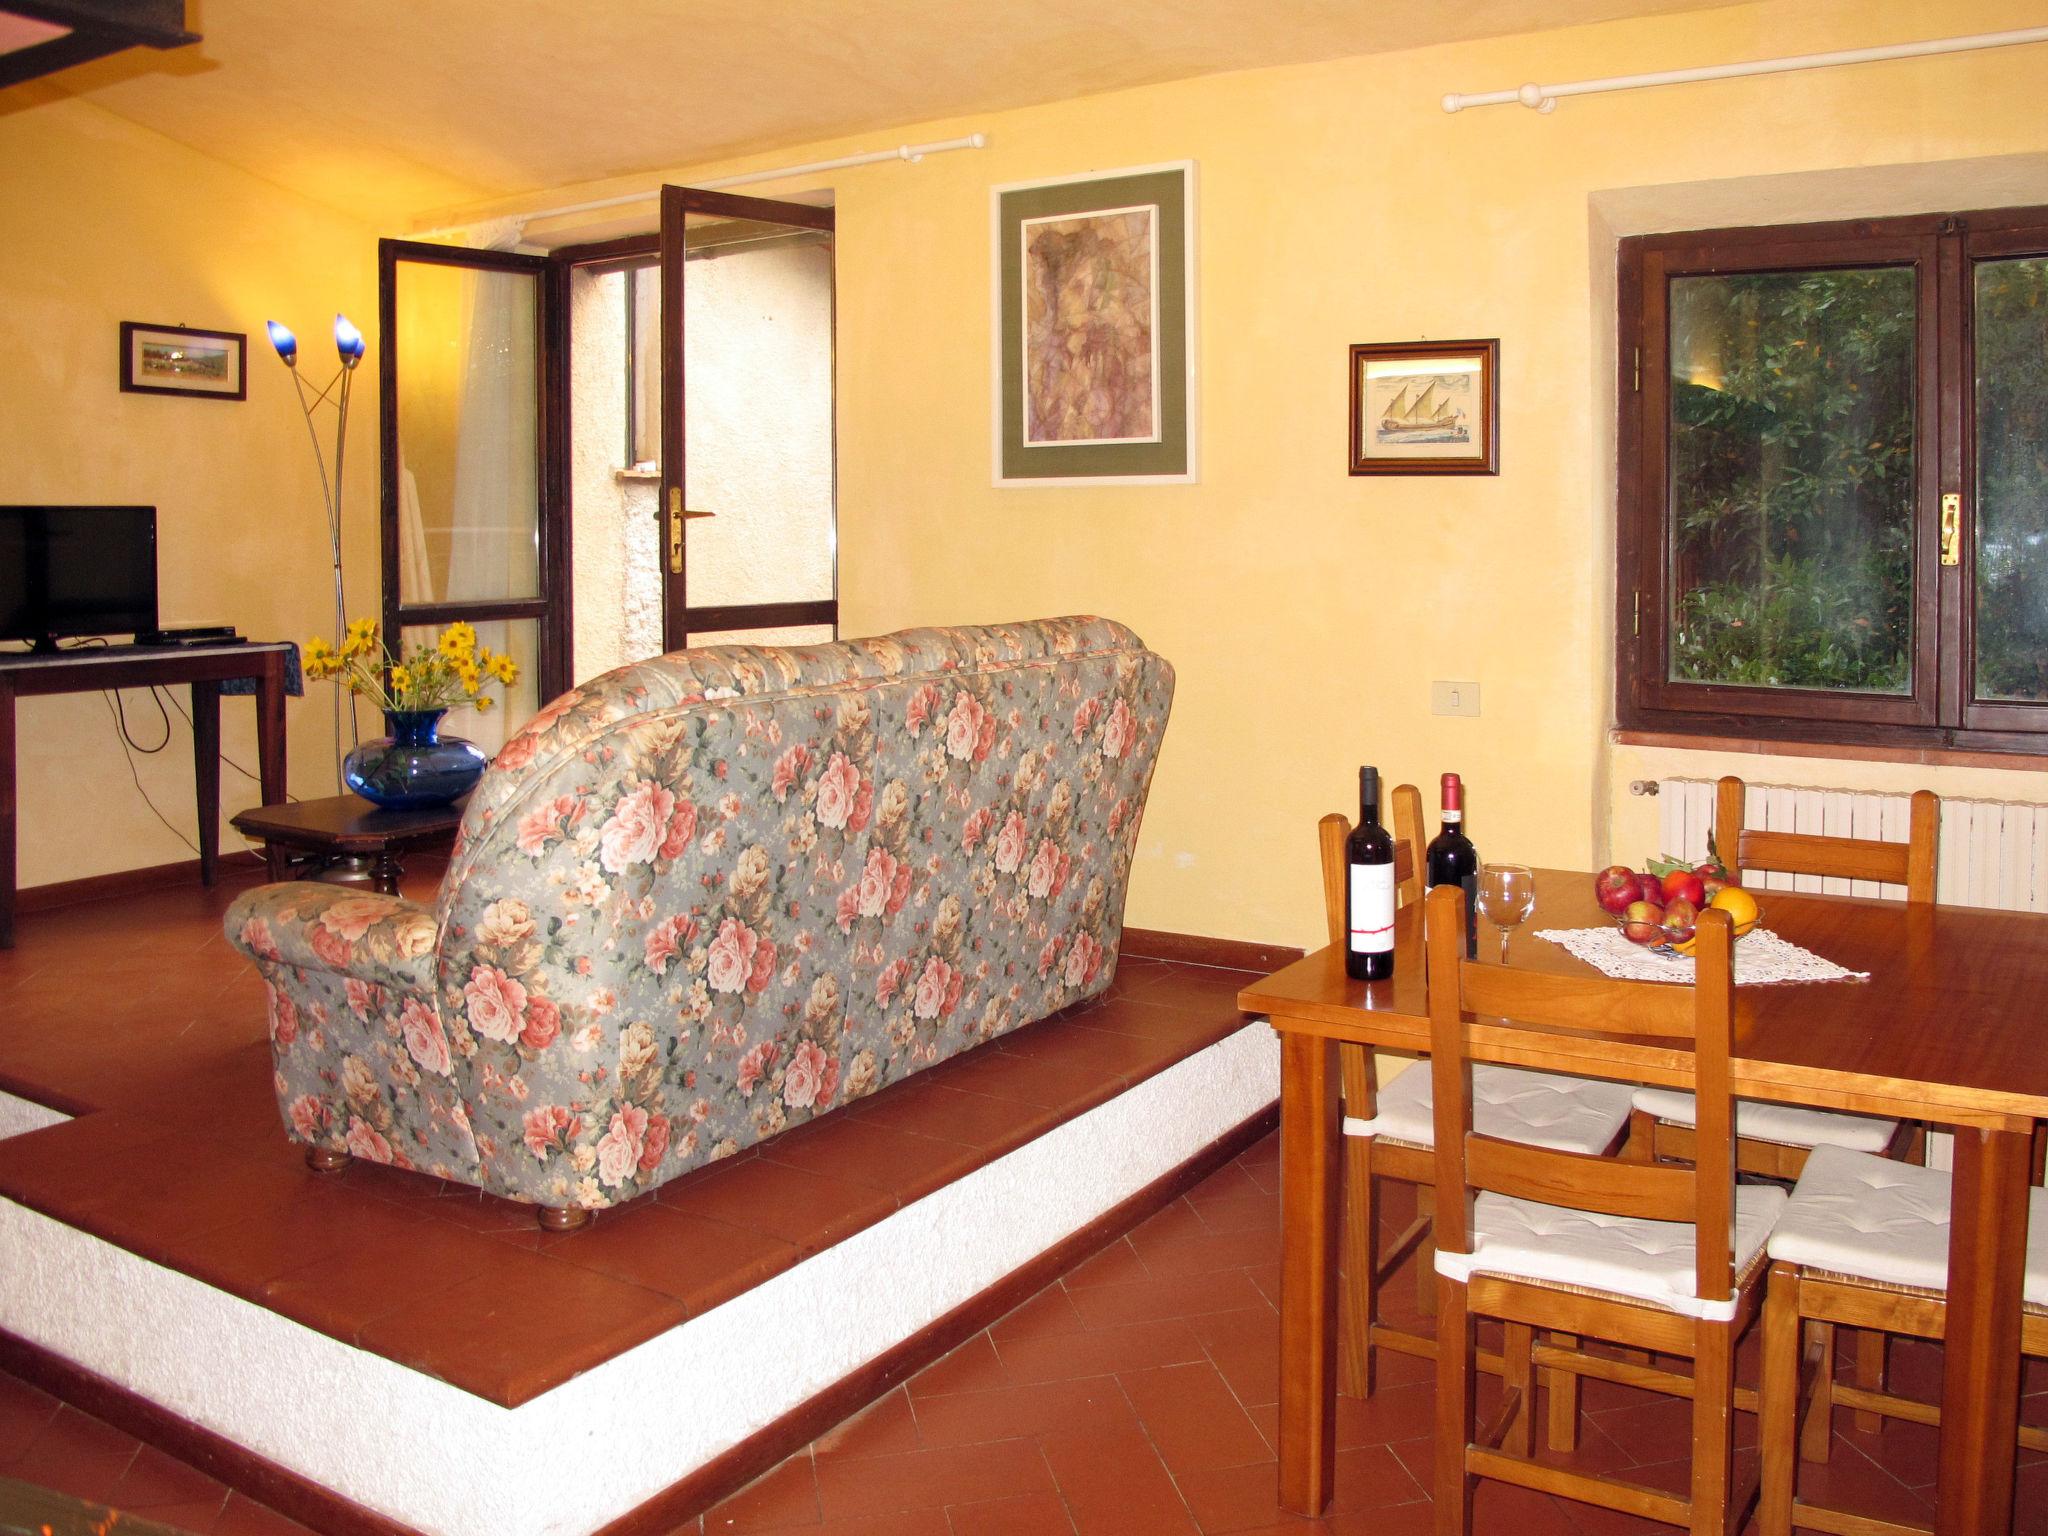 Foto 55 - Casa con 4 camere da letto a San Gimignano con piscina e giardino